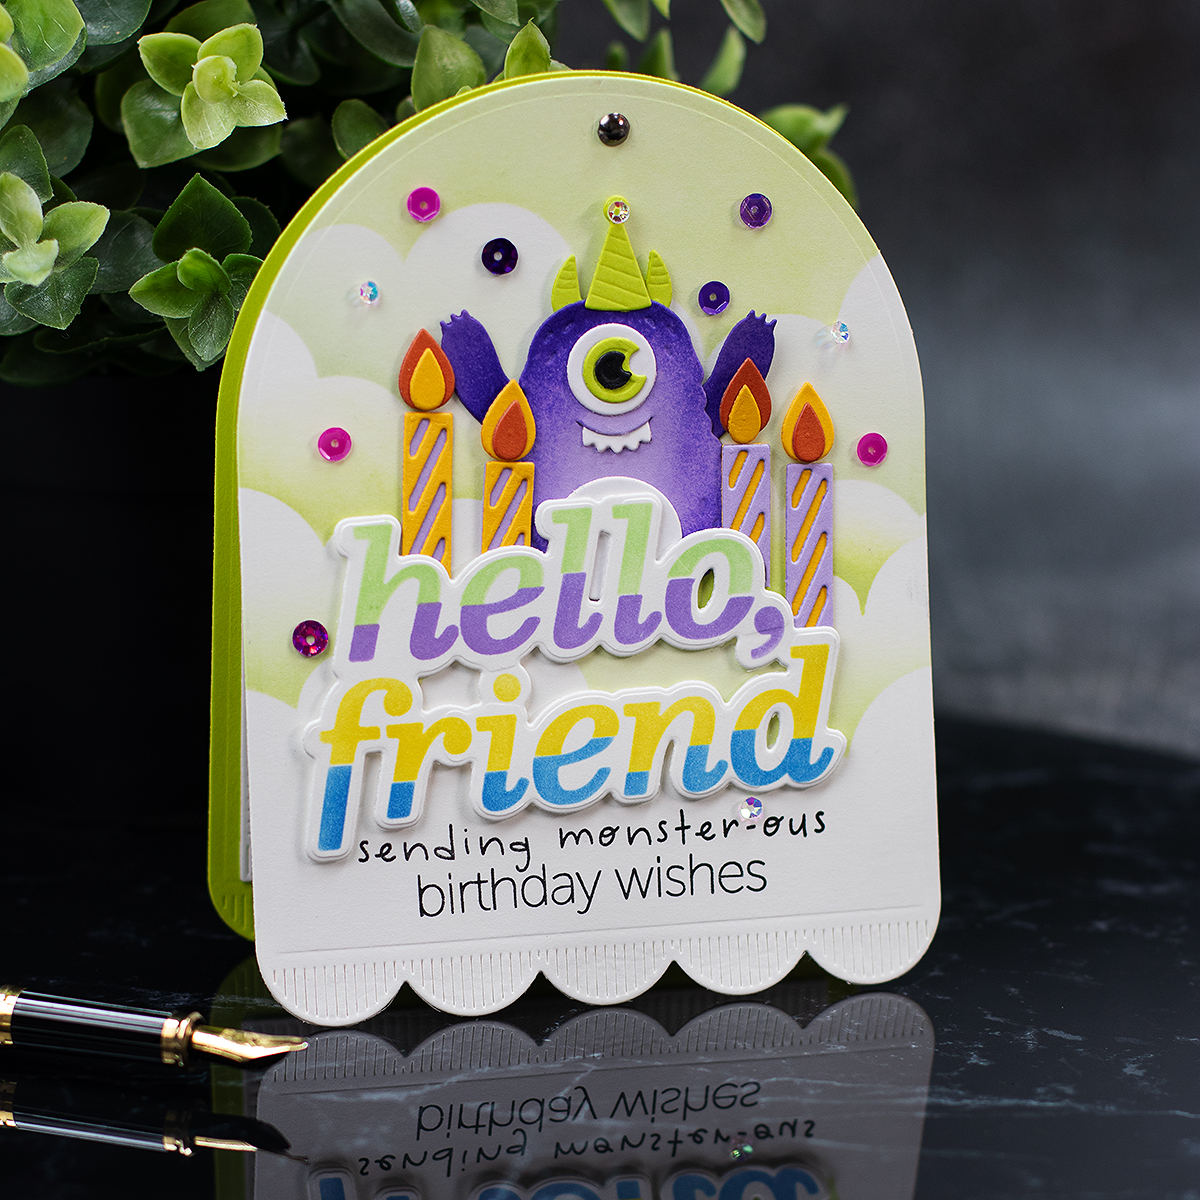 Spellbinders Monster Birthday Card Ideas - Bibi Cameron